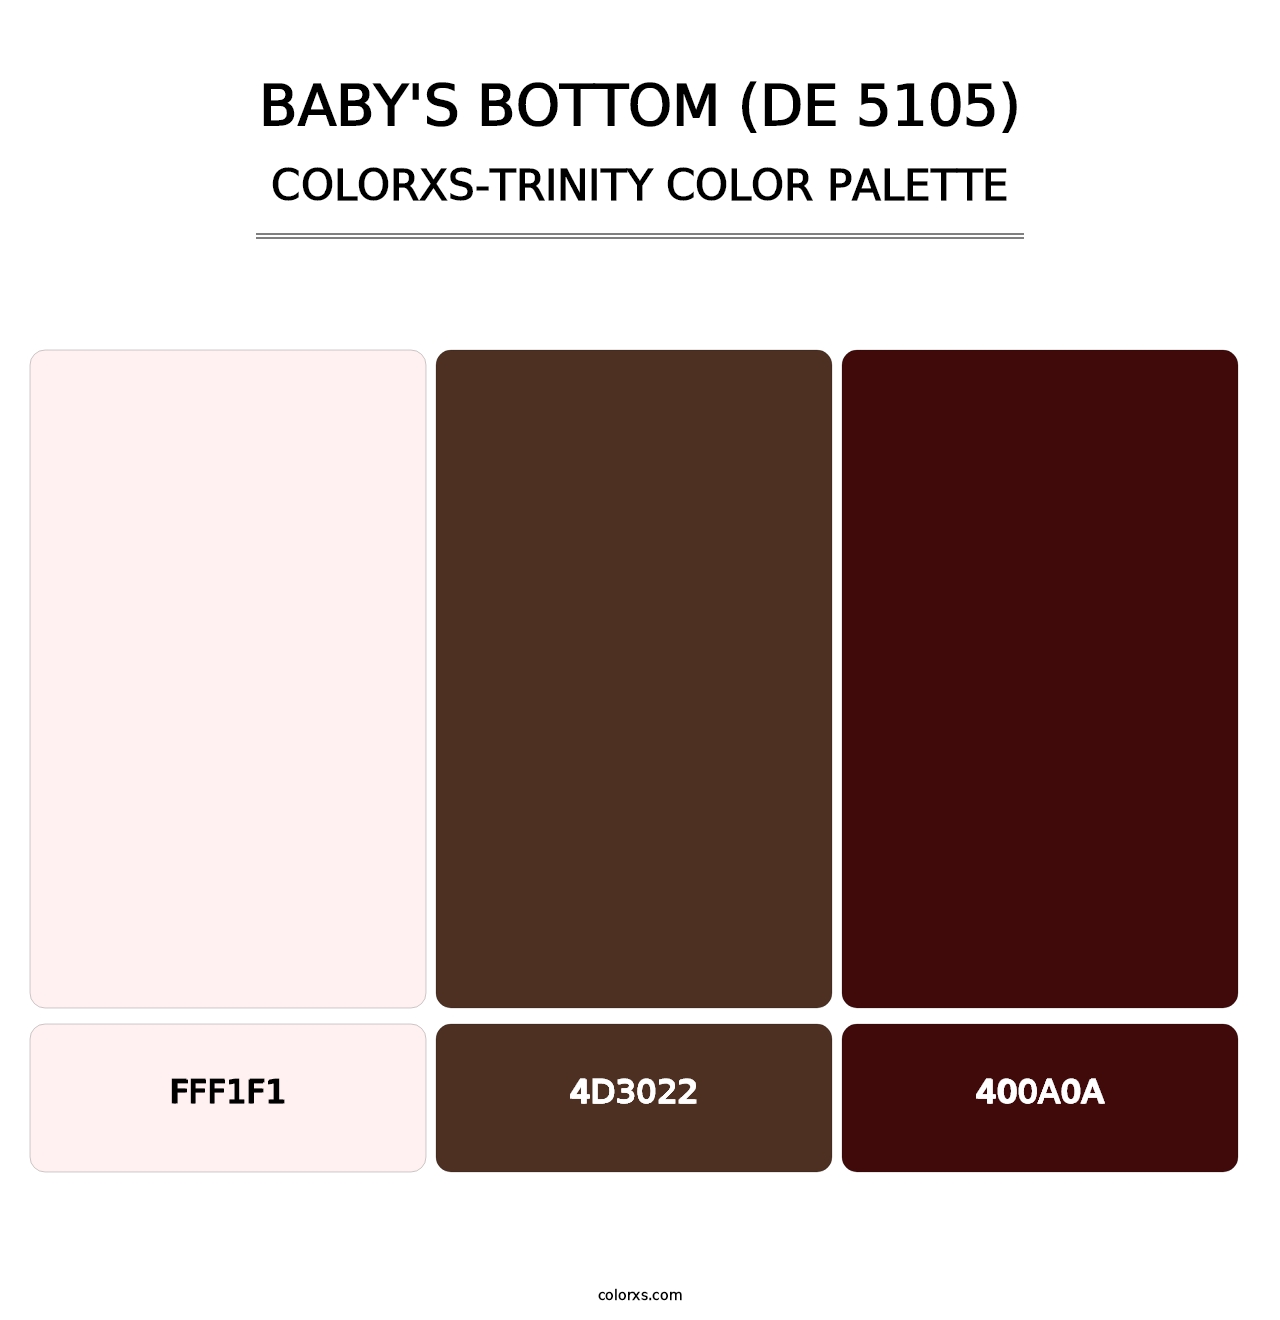 Baby's Bottom (DE 5105) - Colorxs Trinity Palette